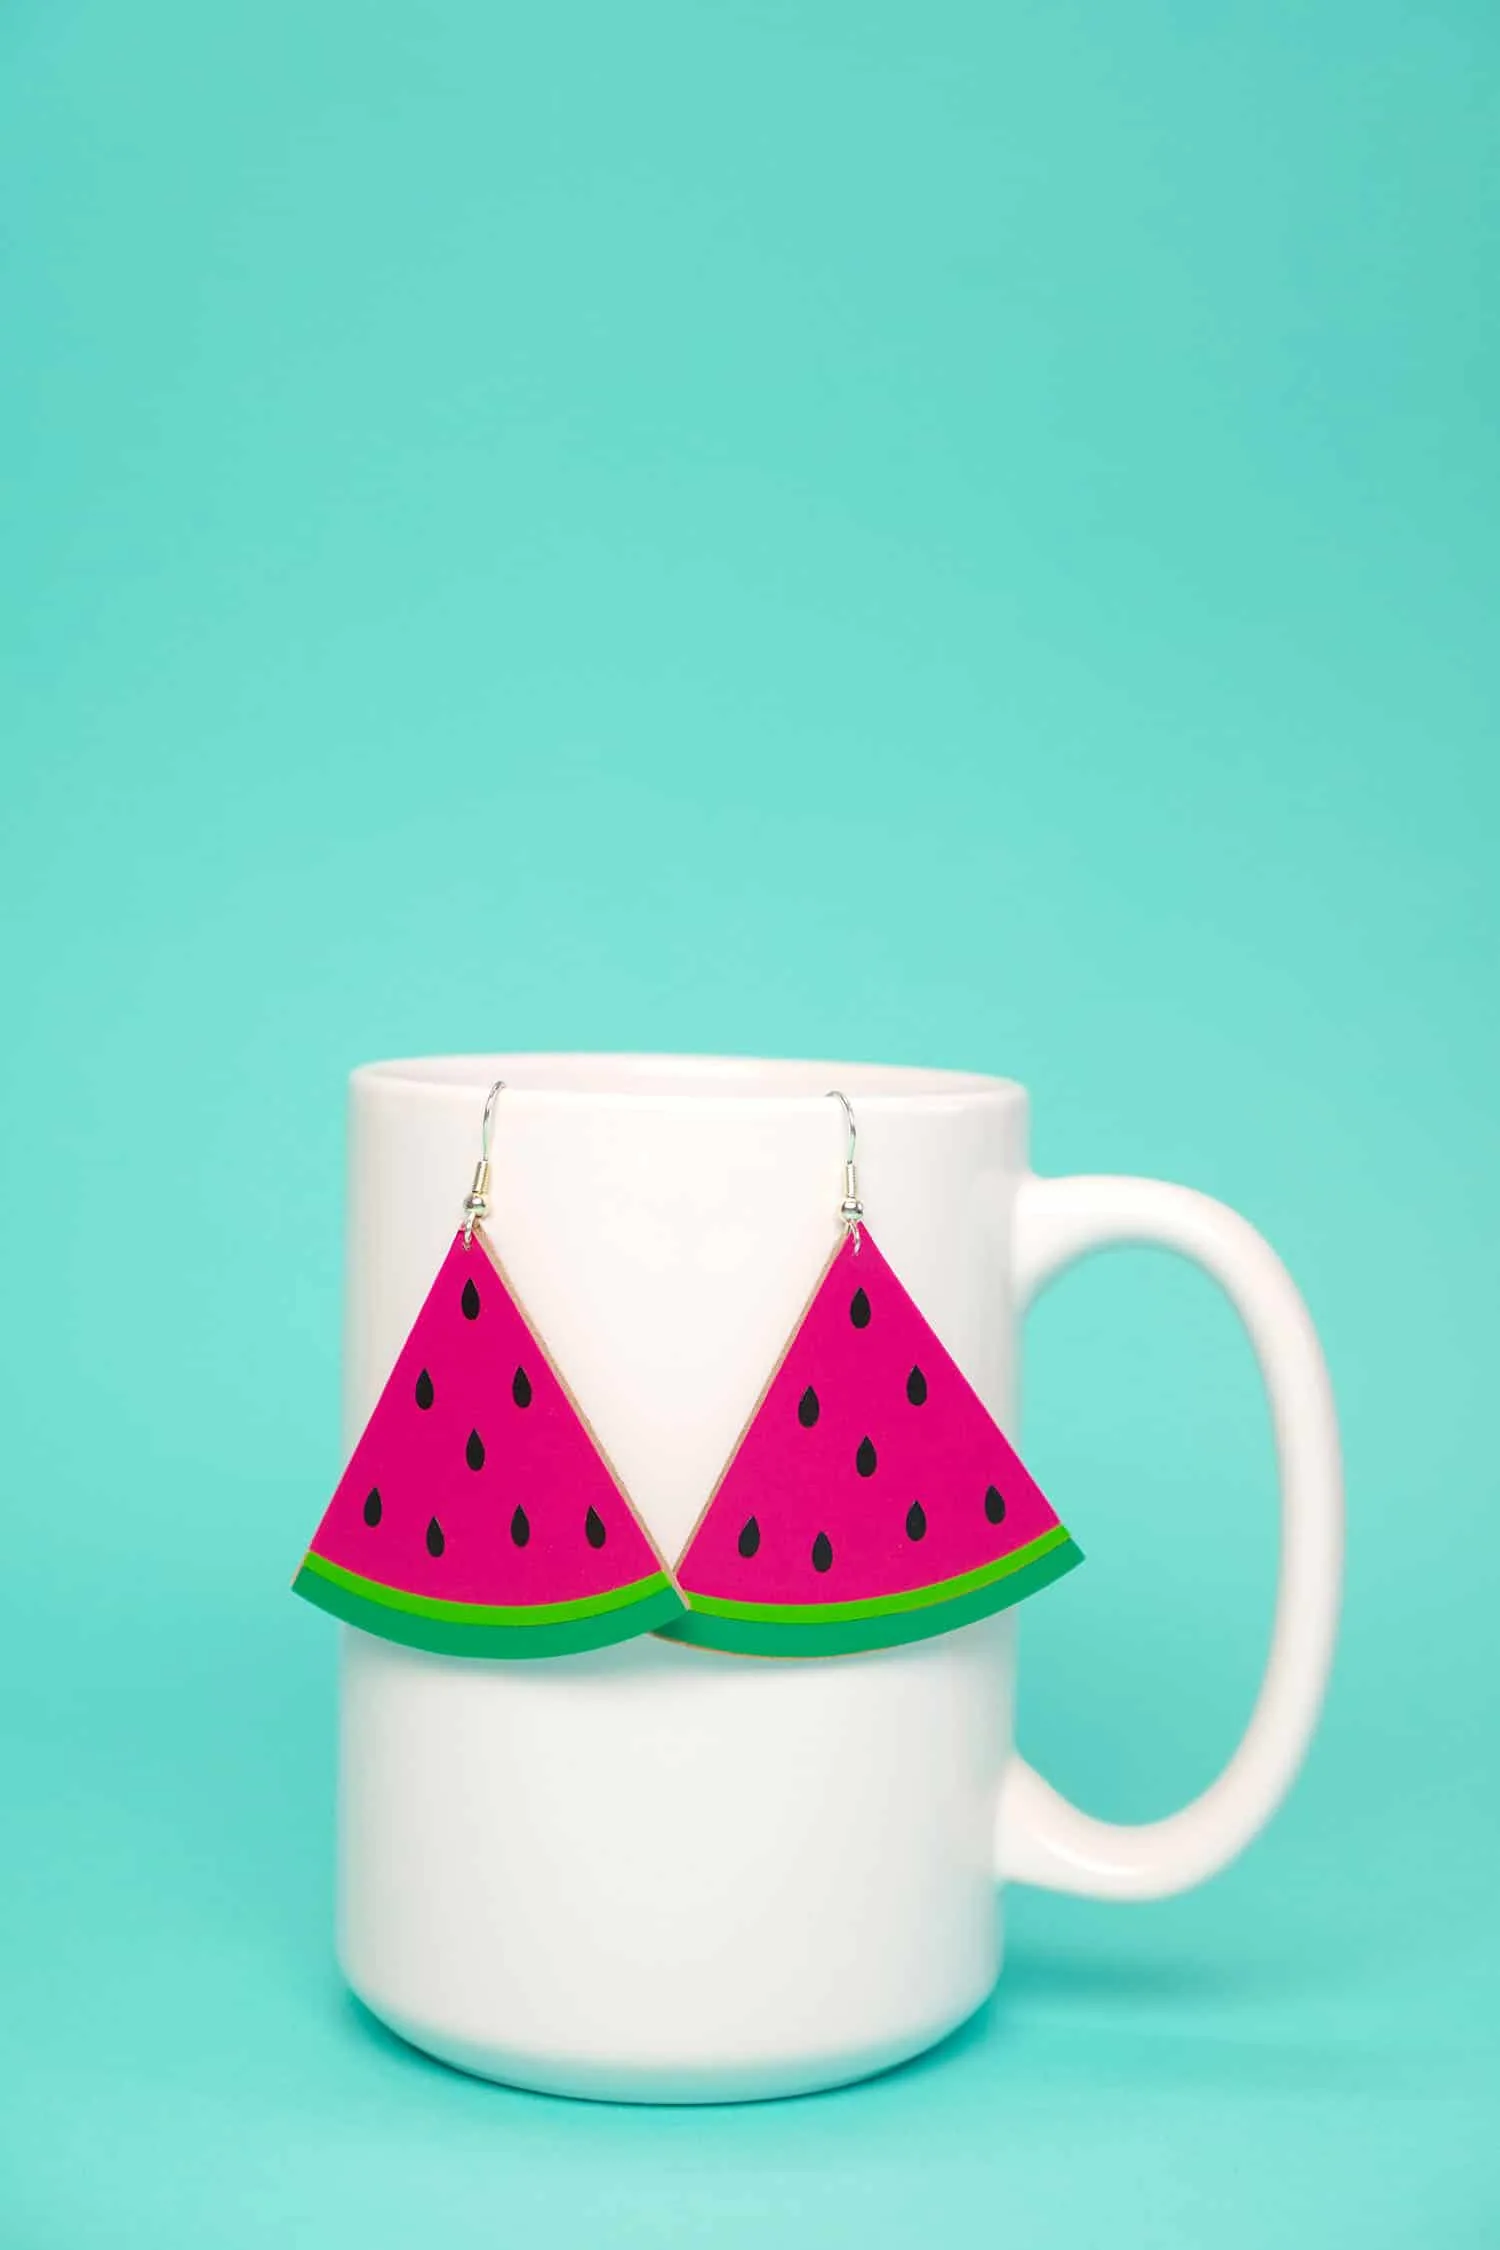 watermelon shaped earrings hanging on a white mug